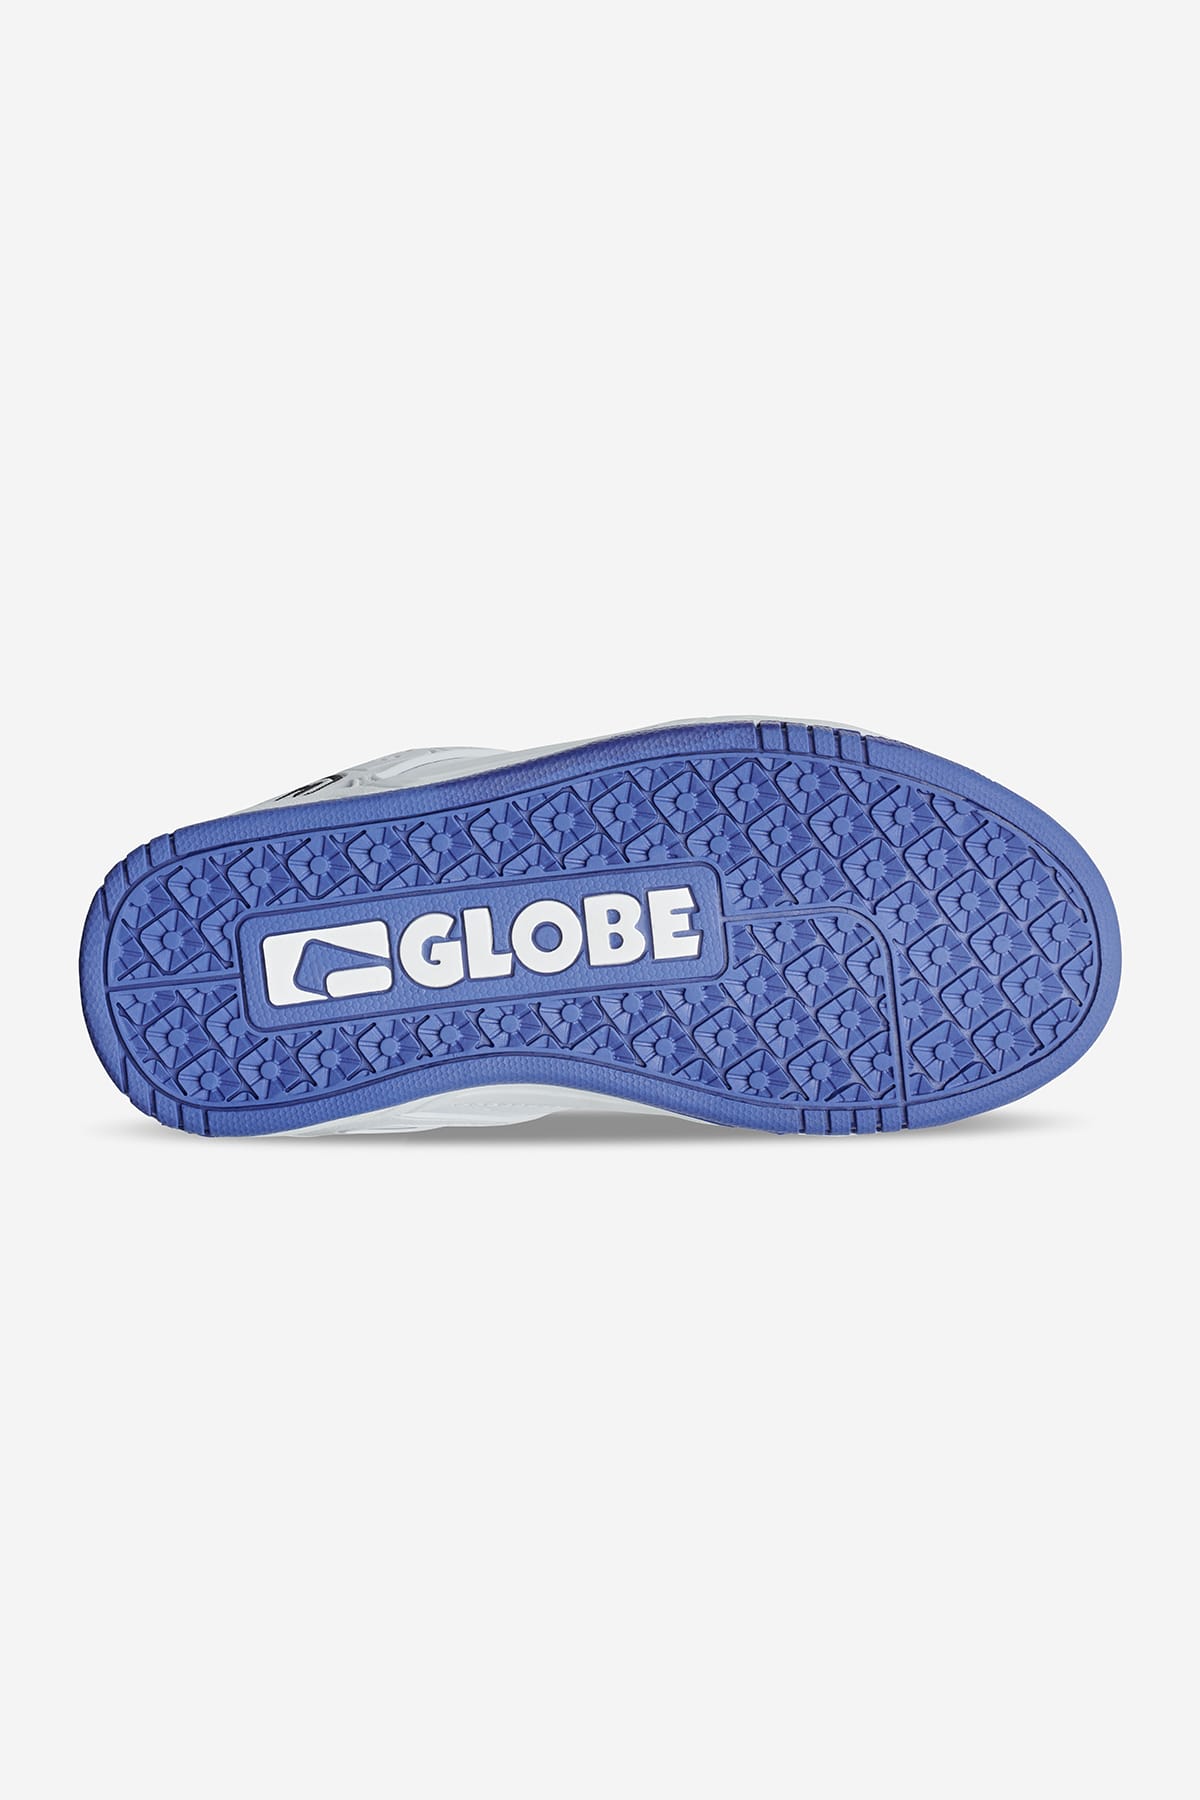 Globe - Tilt Bambini - White/Cobalto - skateboard Scarpe